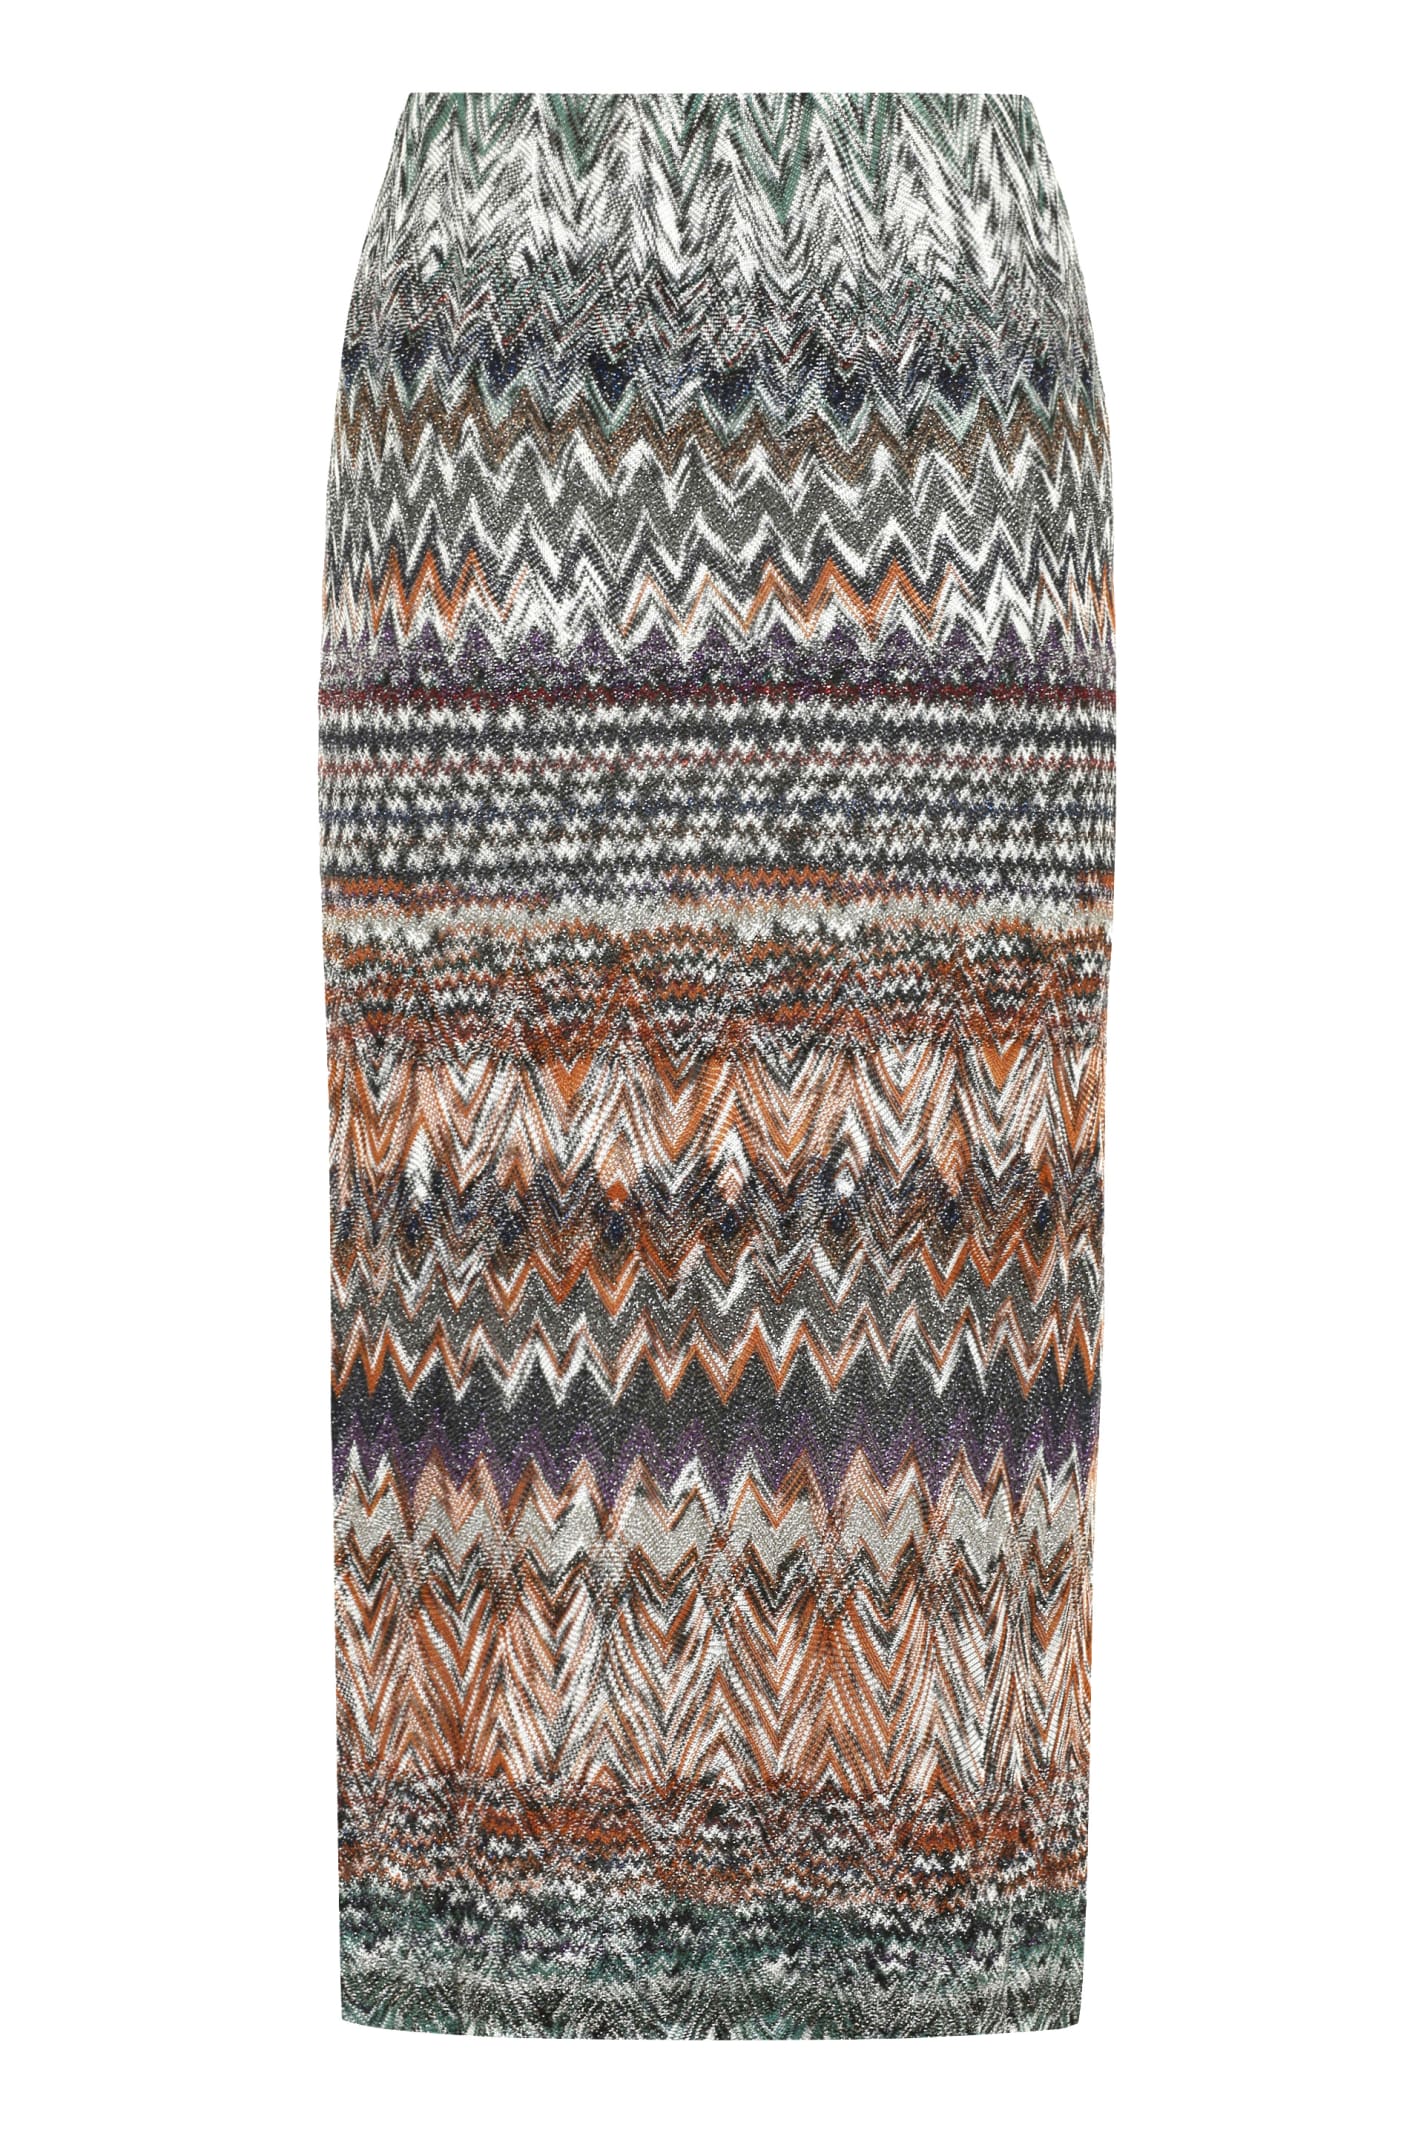 Missoni Chevron Motif Knitted Skirt In Multicolor